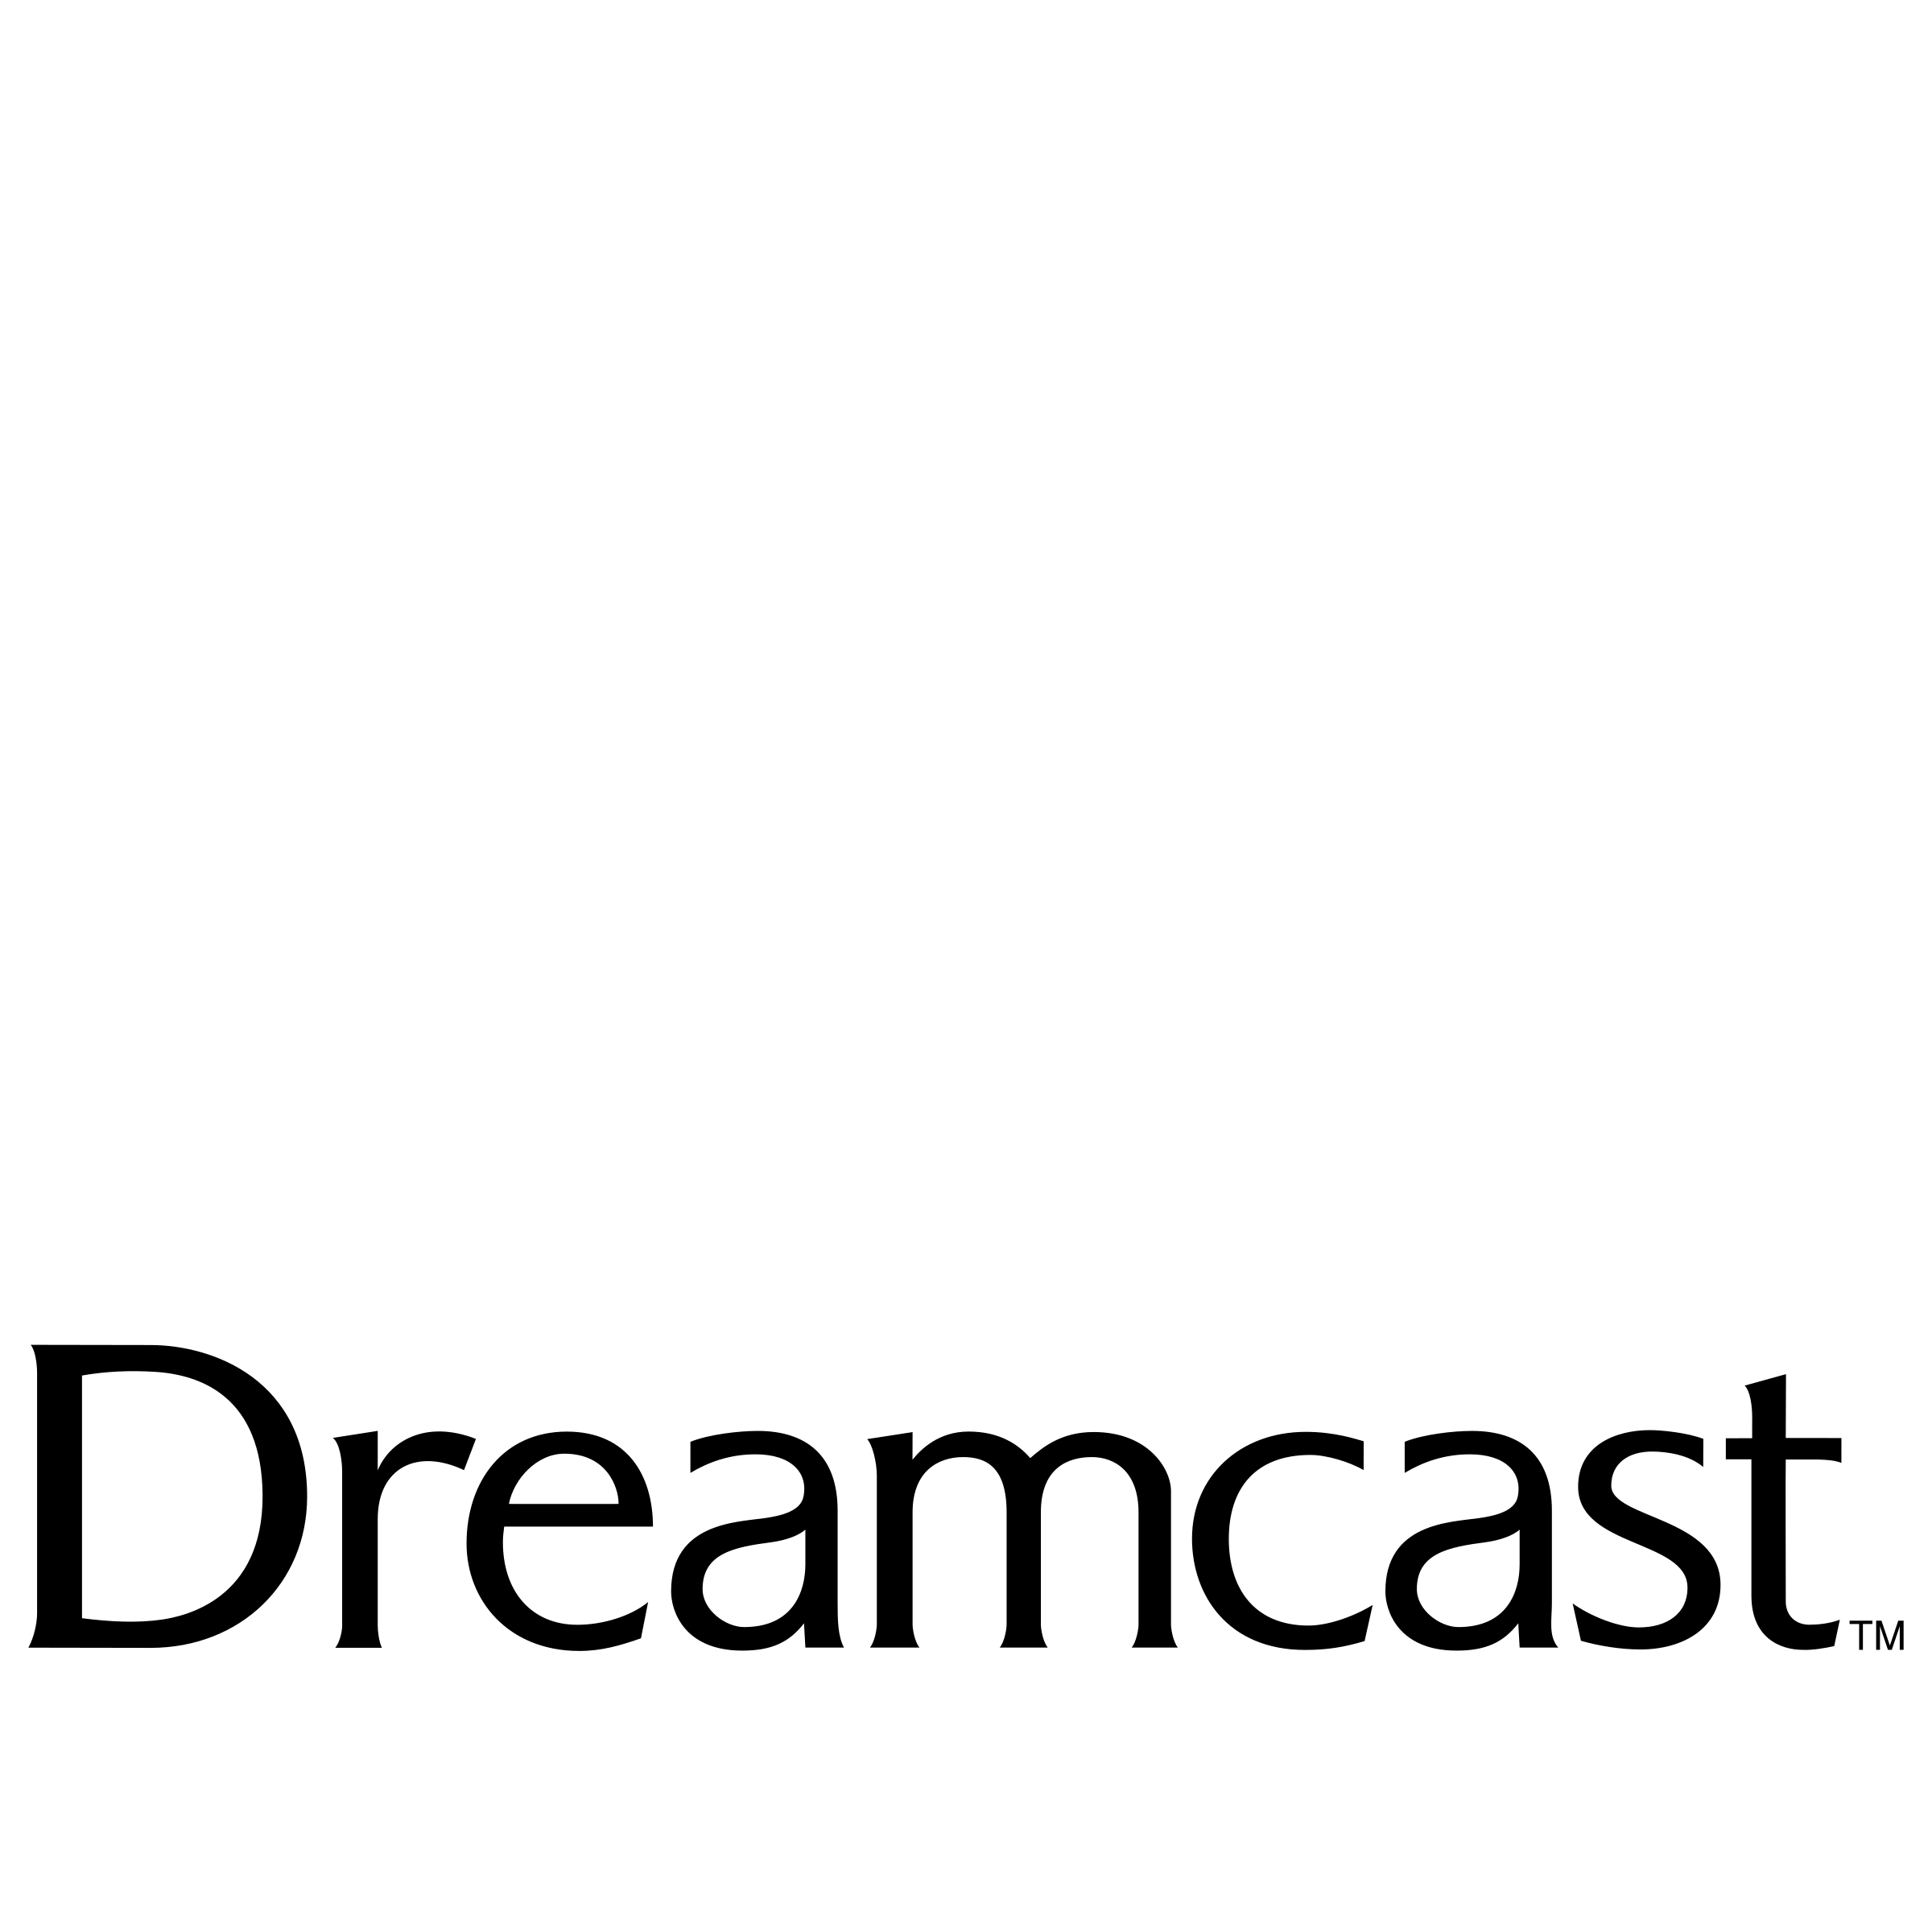 Dreamcast Logo - Dreamcast Logo PNG Transparent & SVG Vector